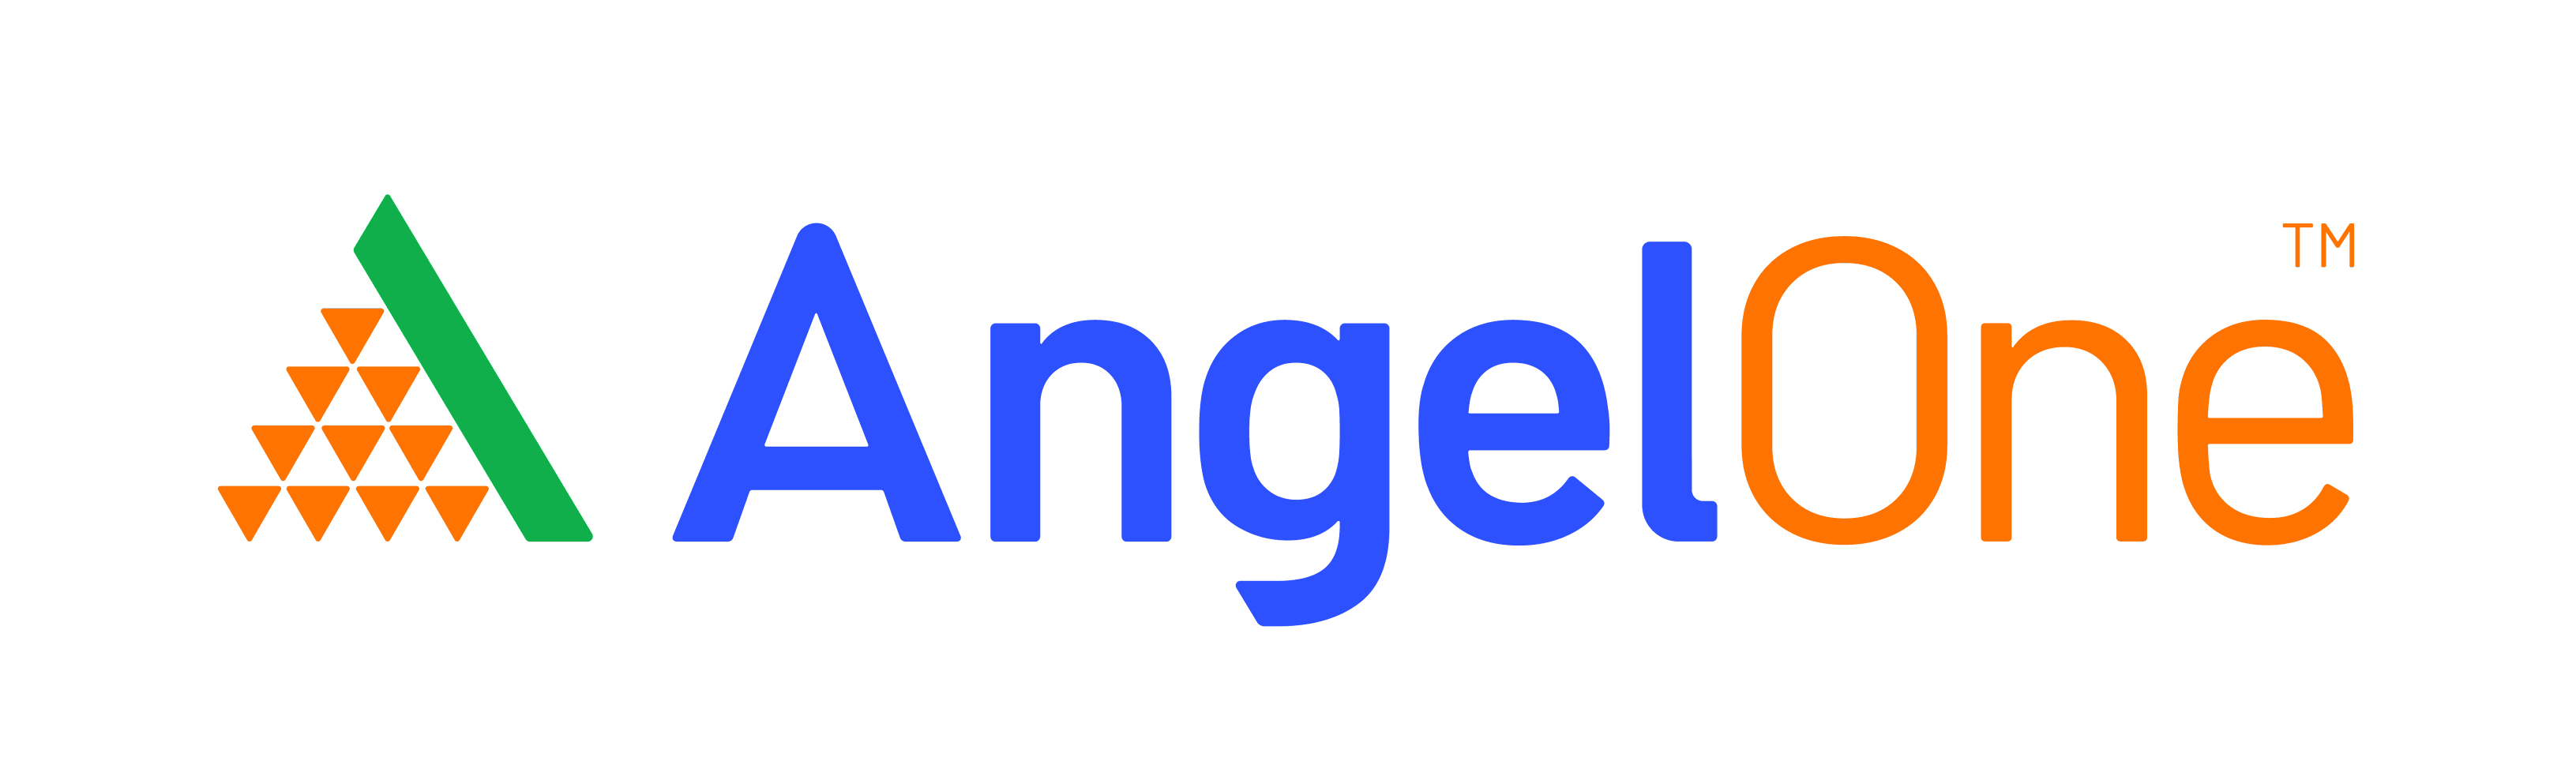 AngelOne logo